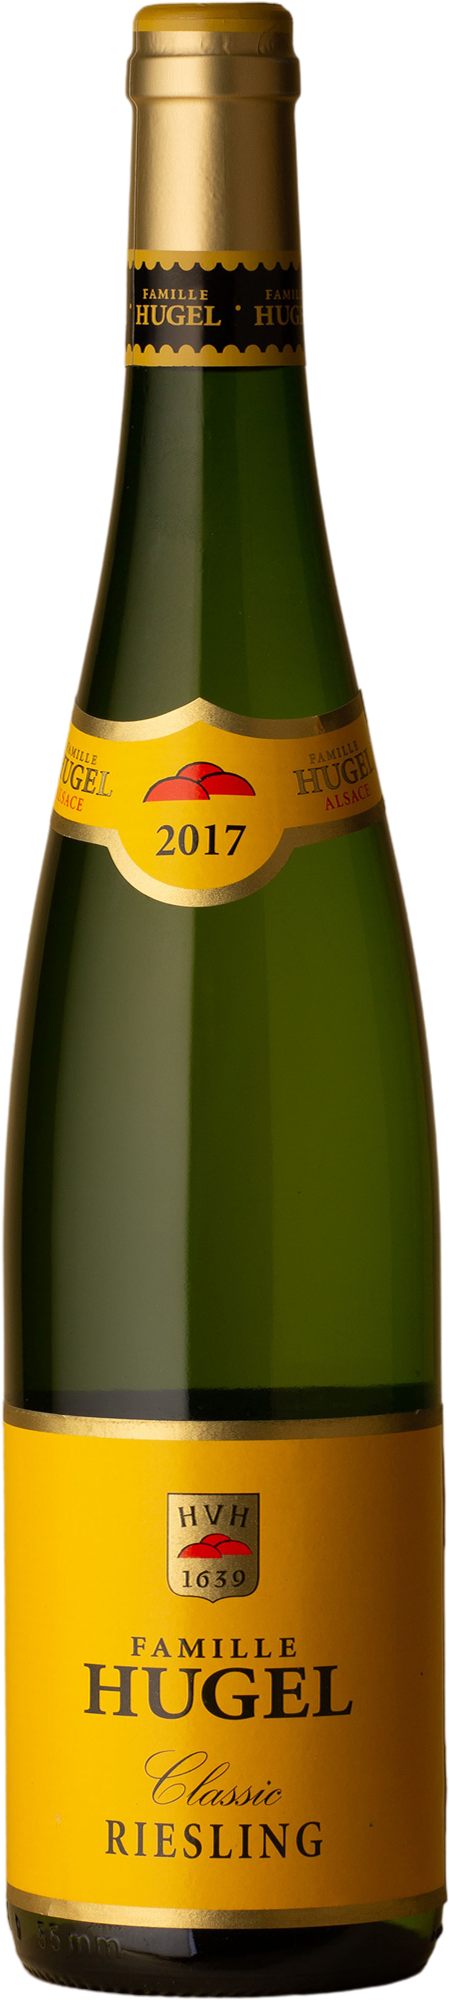 Hugel - Classic Riesling 2017 White Wine